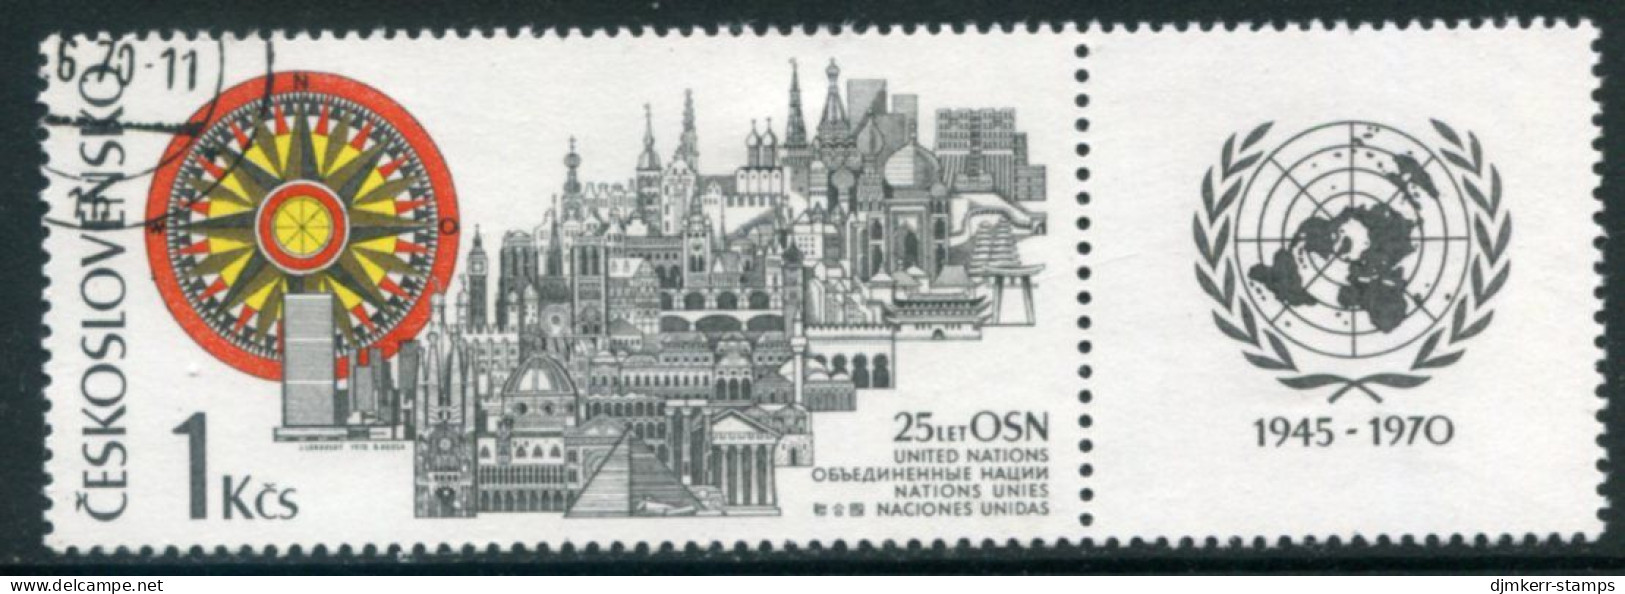 CZECHOSLOVAKIA 1970 UNO 25th Anniversary With Label Used Michel 1945 Zf - Gebruikt